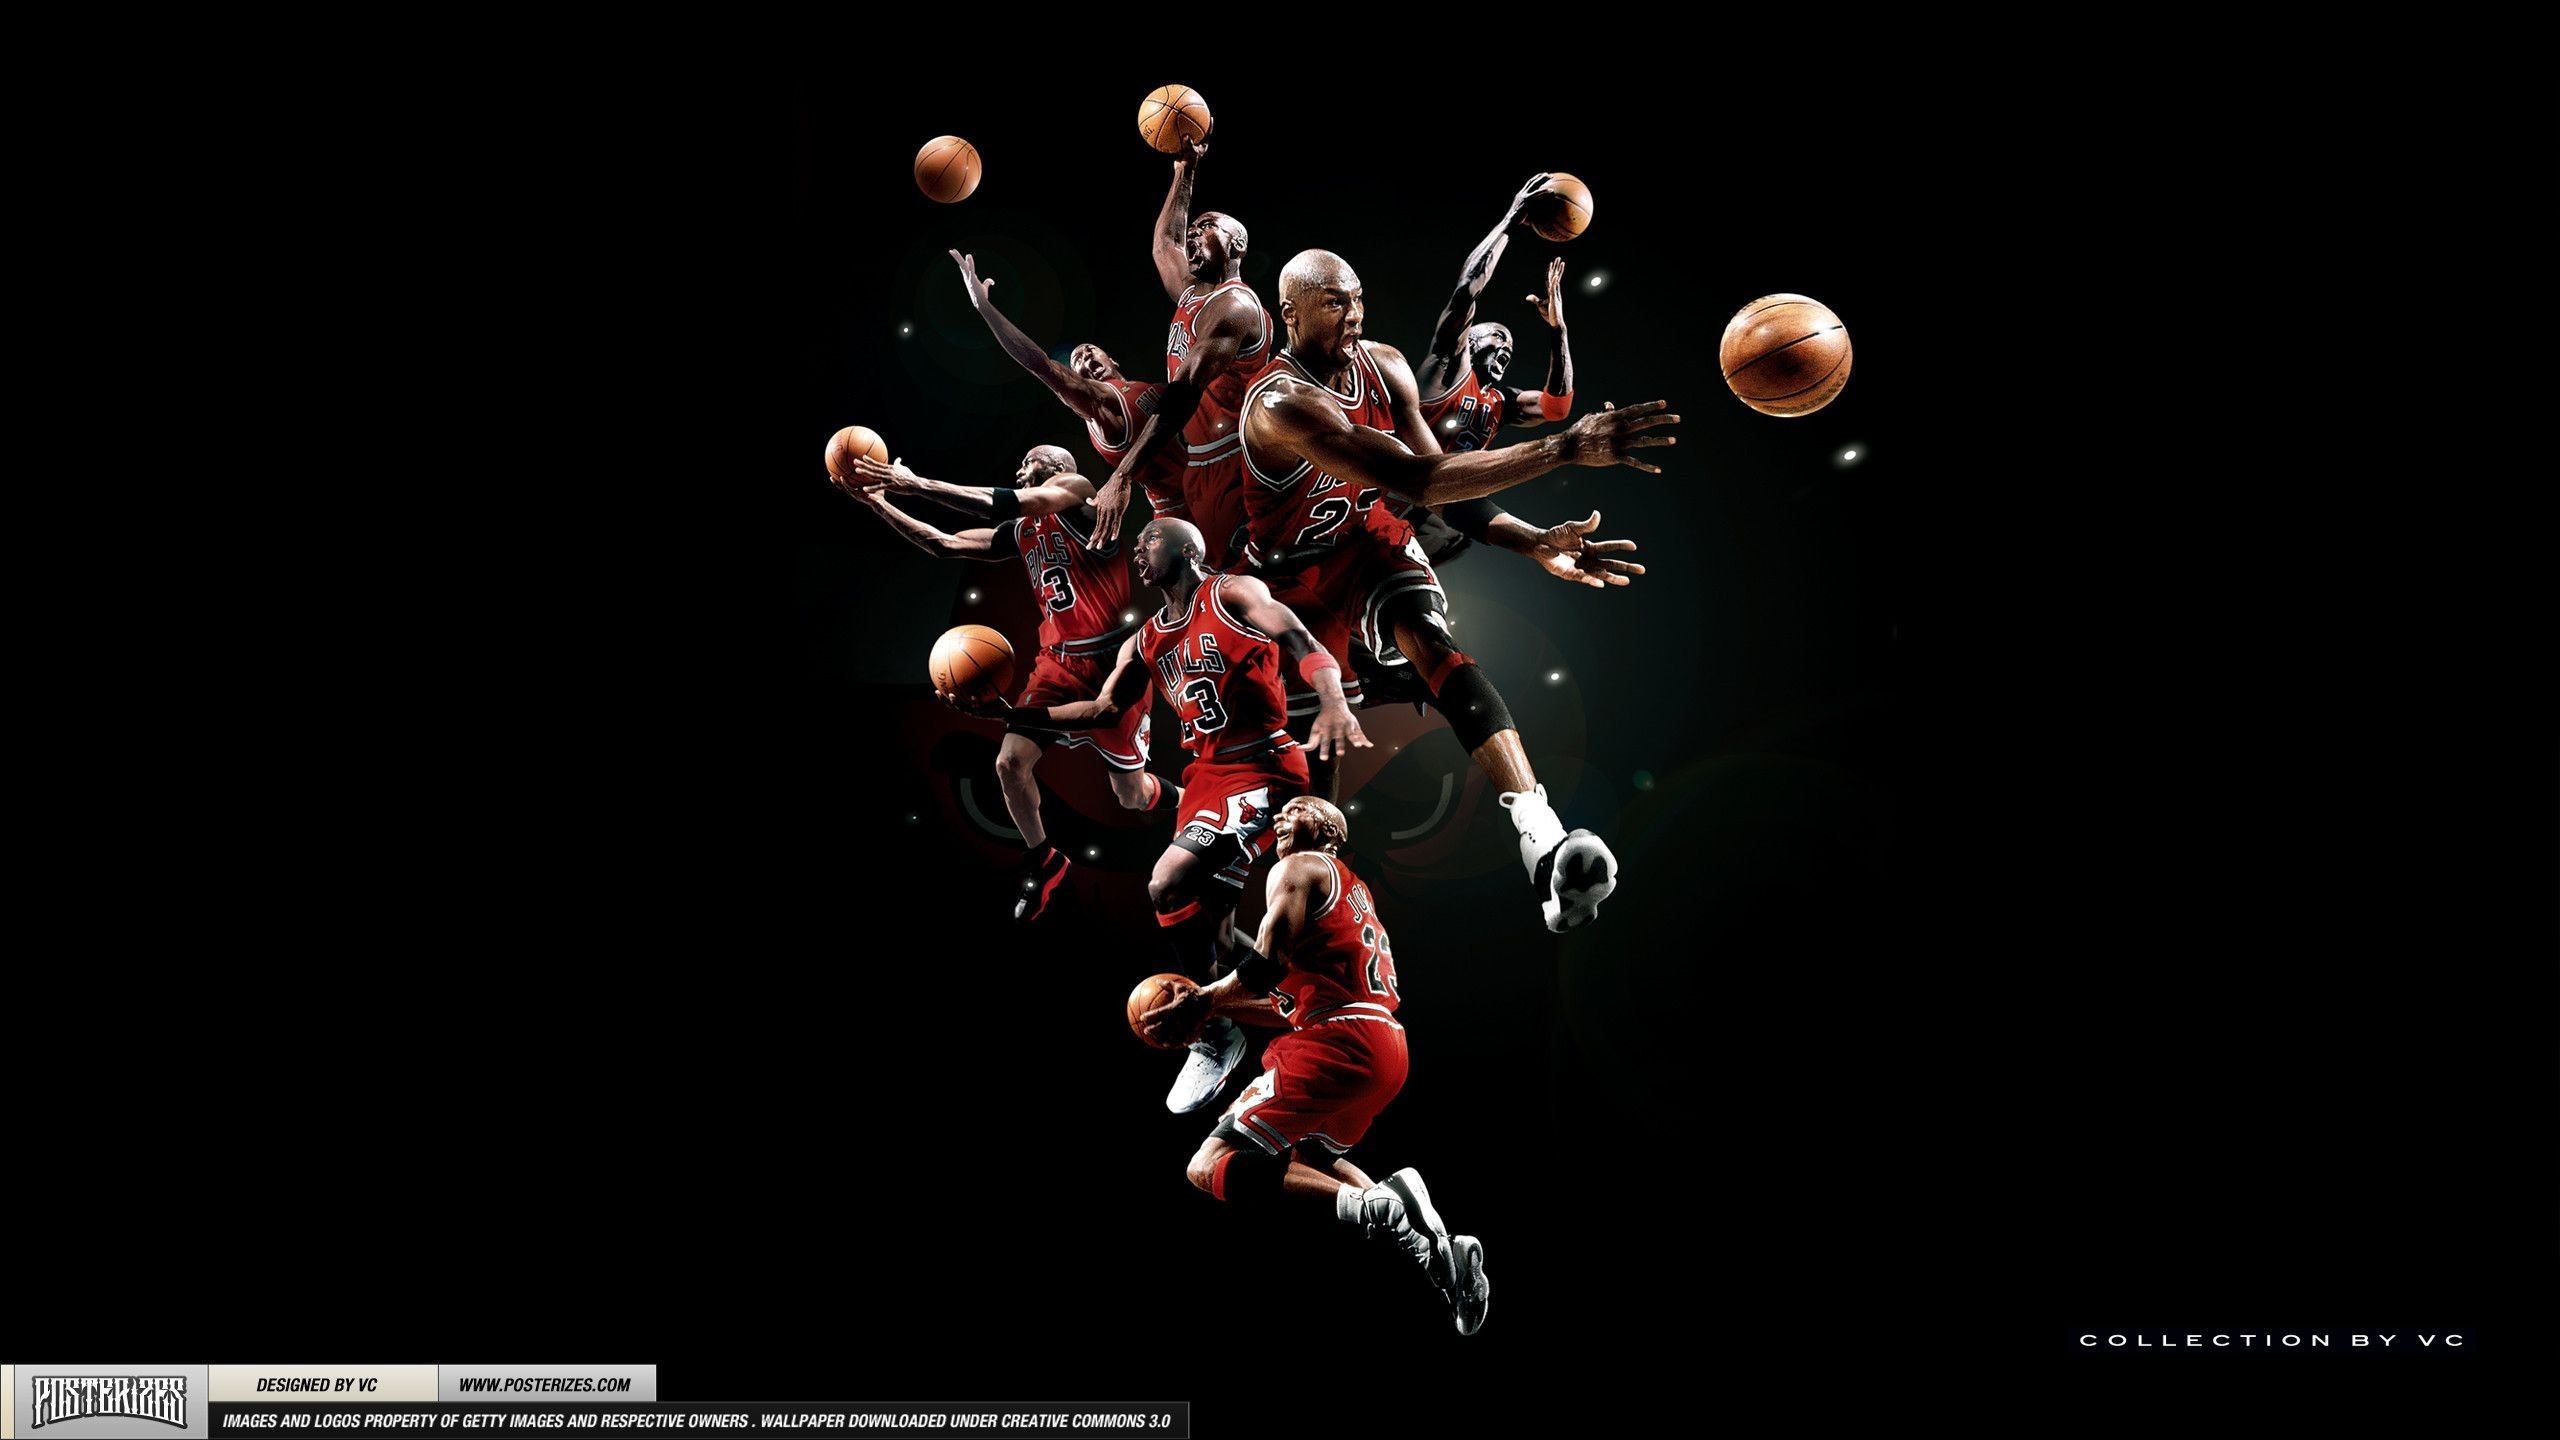 Jordan HD Wallpapers Wallpaper Chicago Bulls